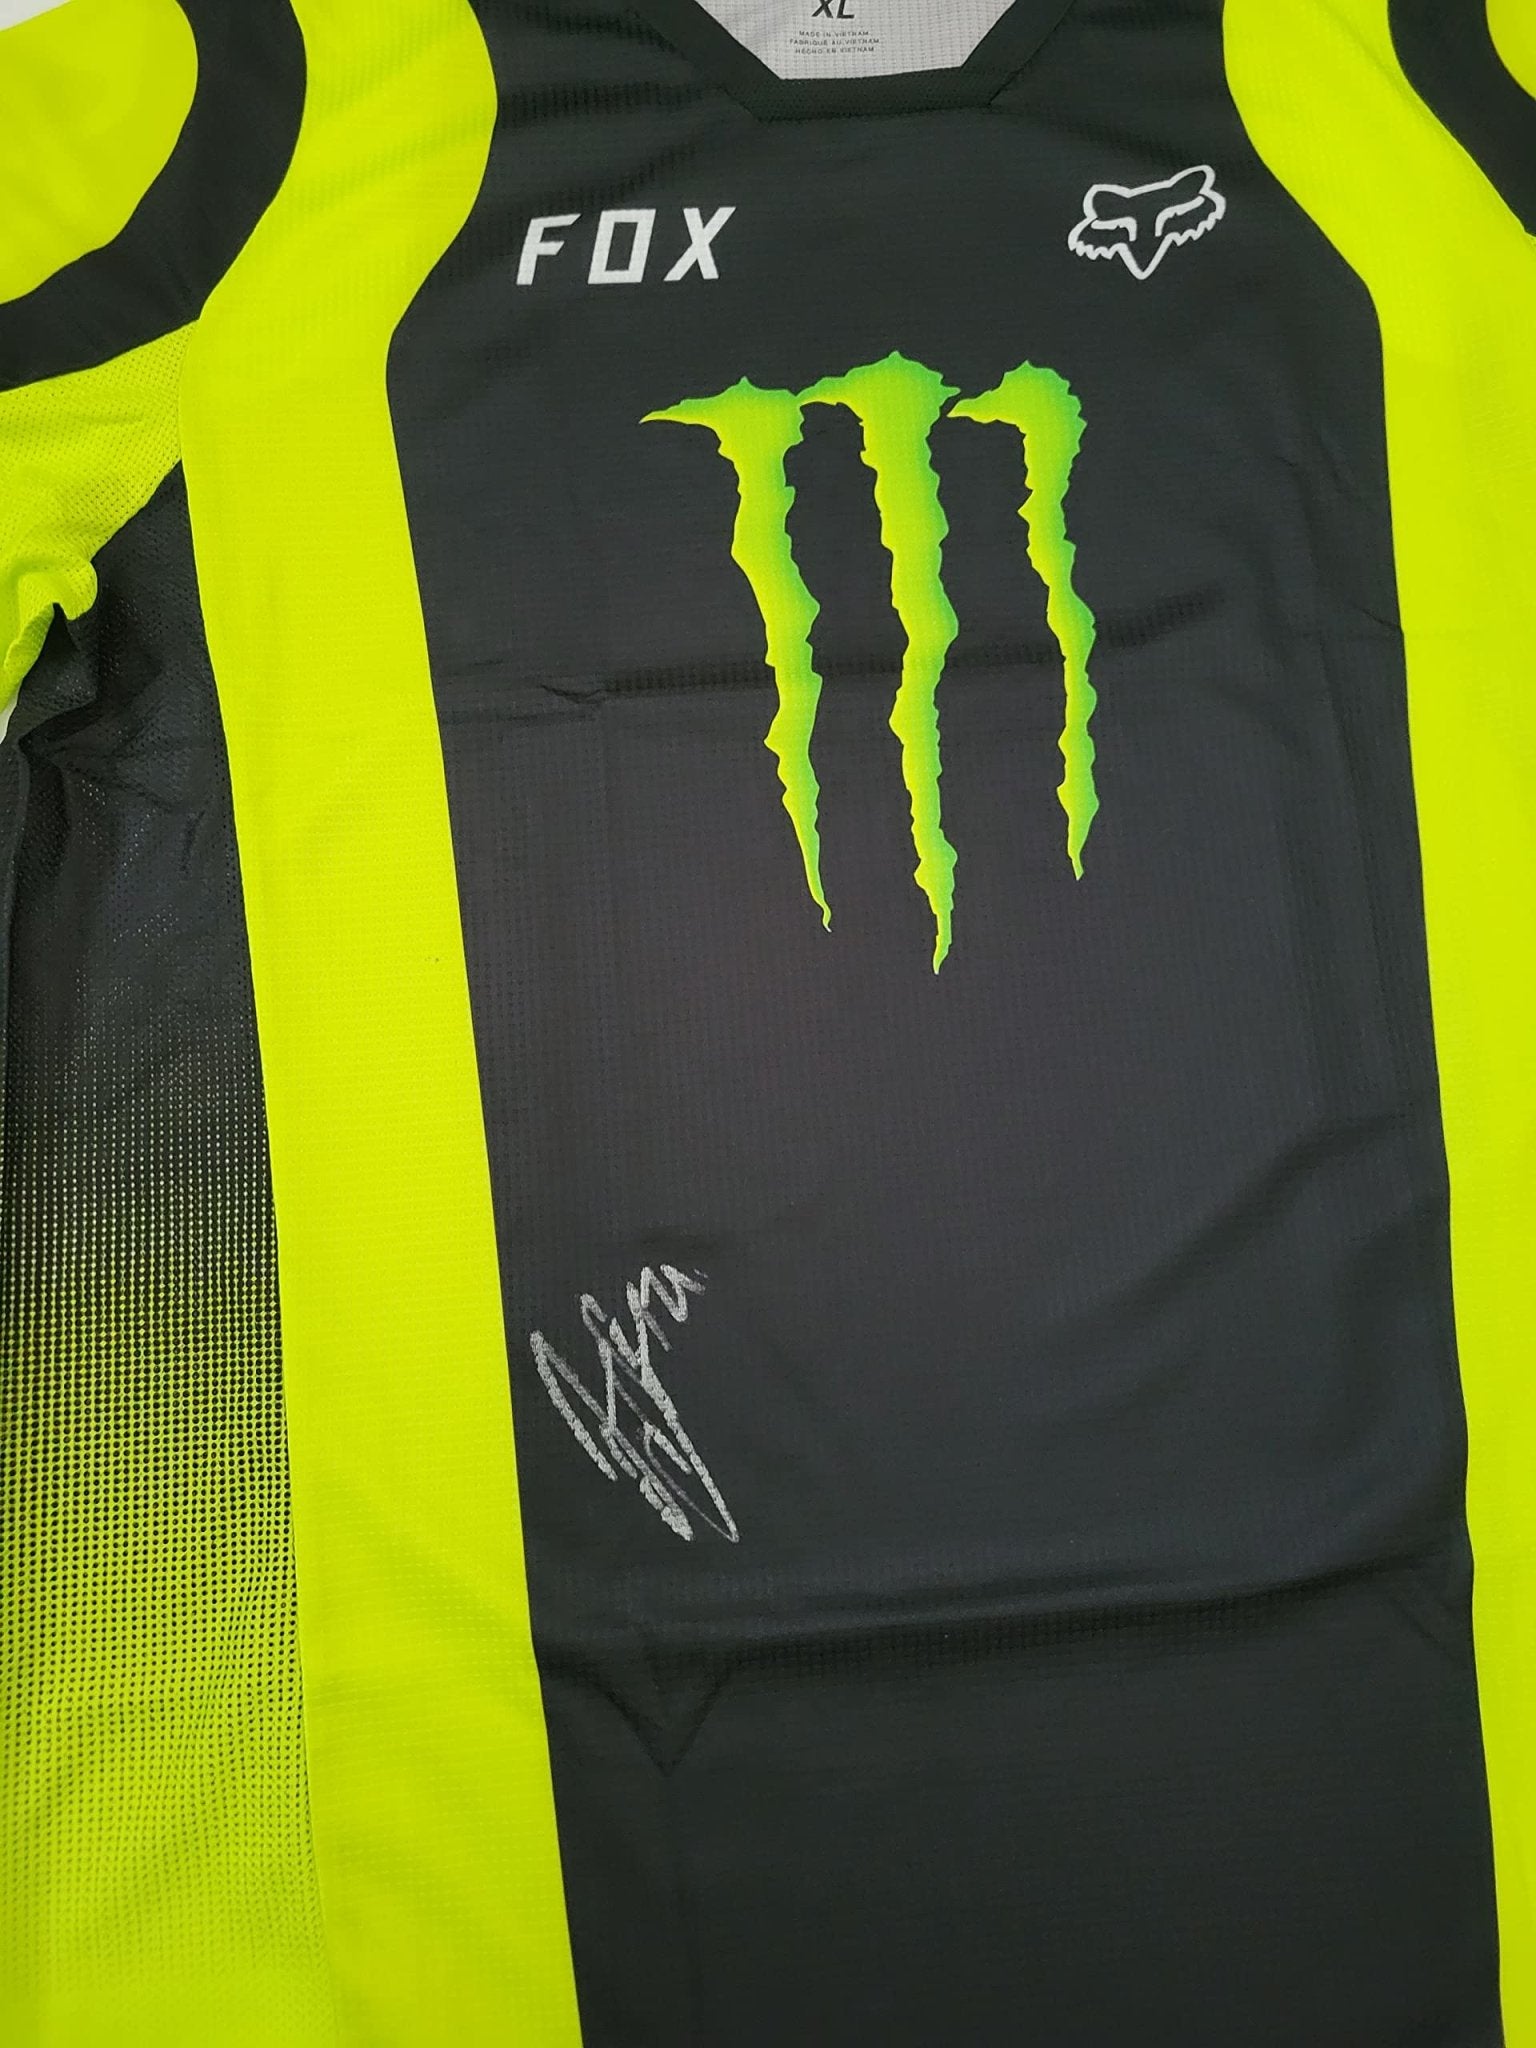 Jason Anderson Supercross Motocross Signed Monster Jersey COA Proof Autographed - Coast to Coast Collectibles Memorabilia - #sports_memorabilia#- #